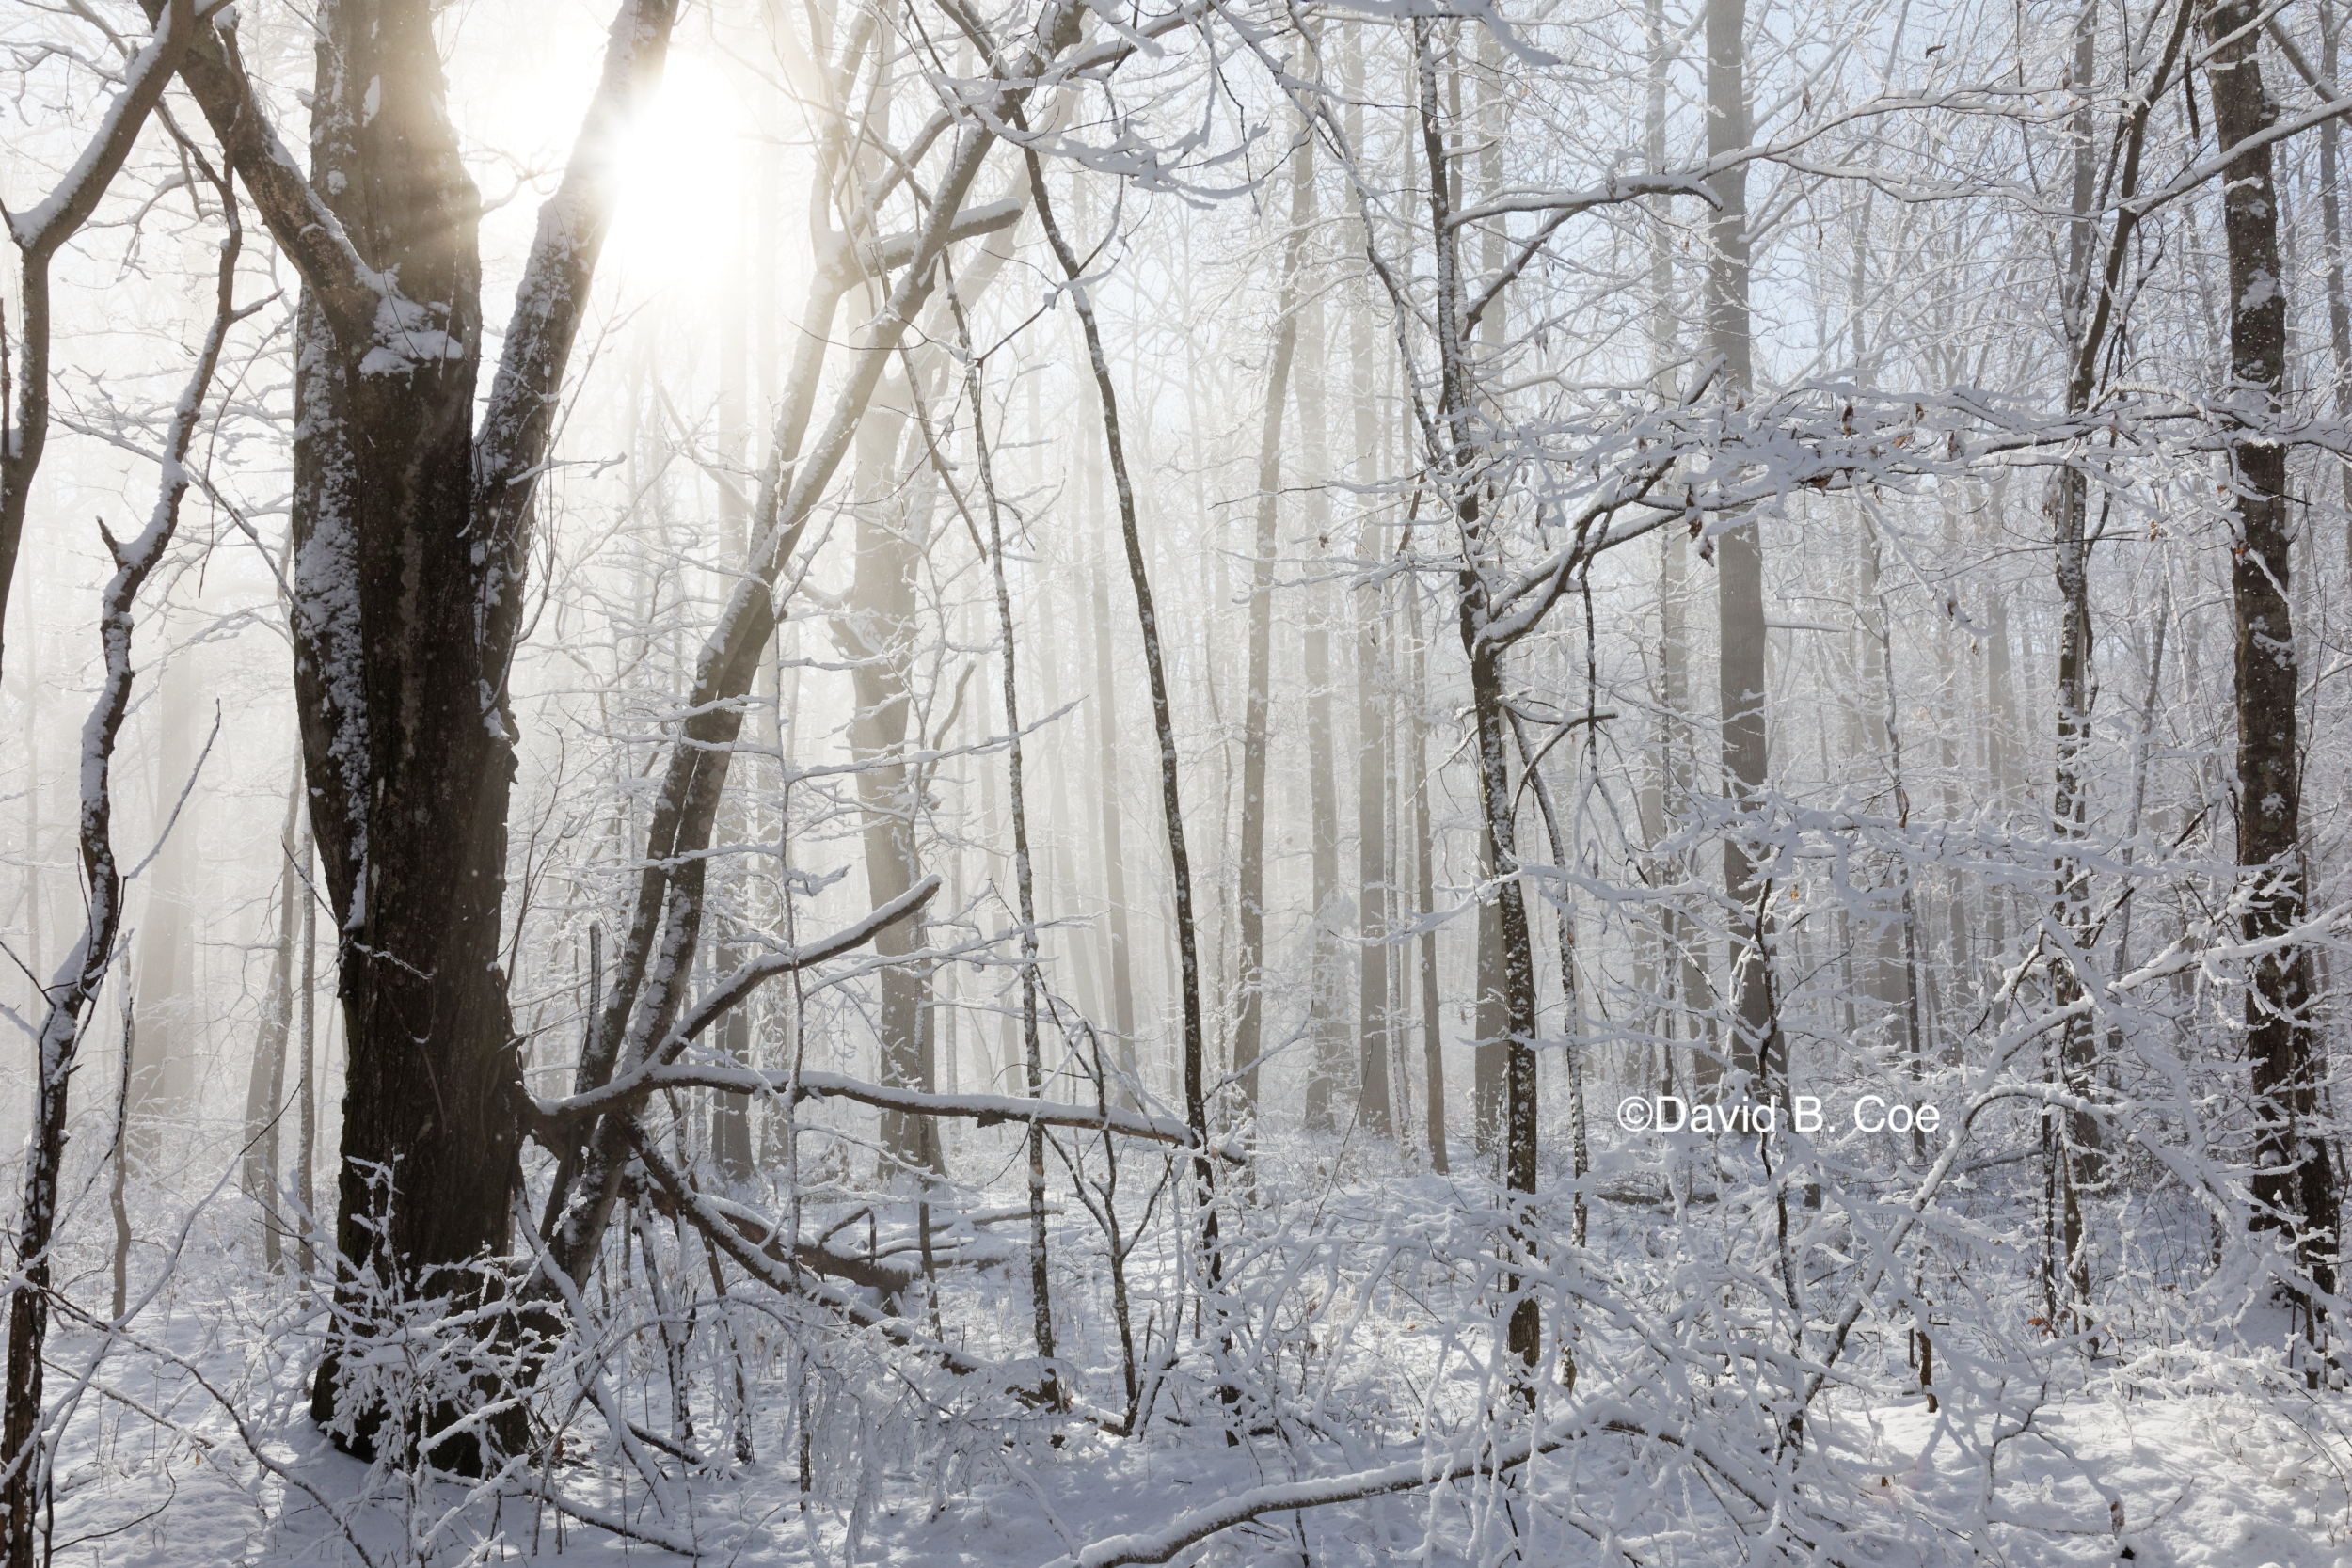 Snow and Mist I, by David B. Coe